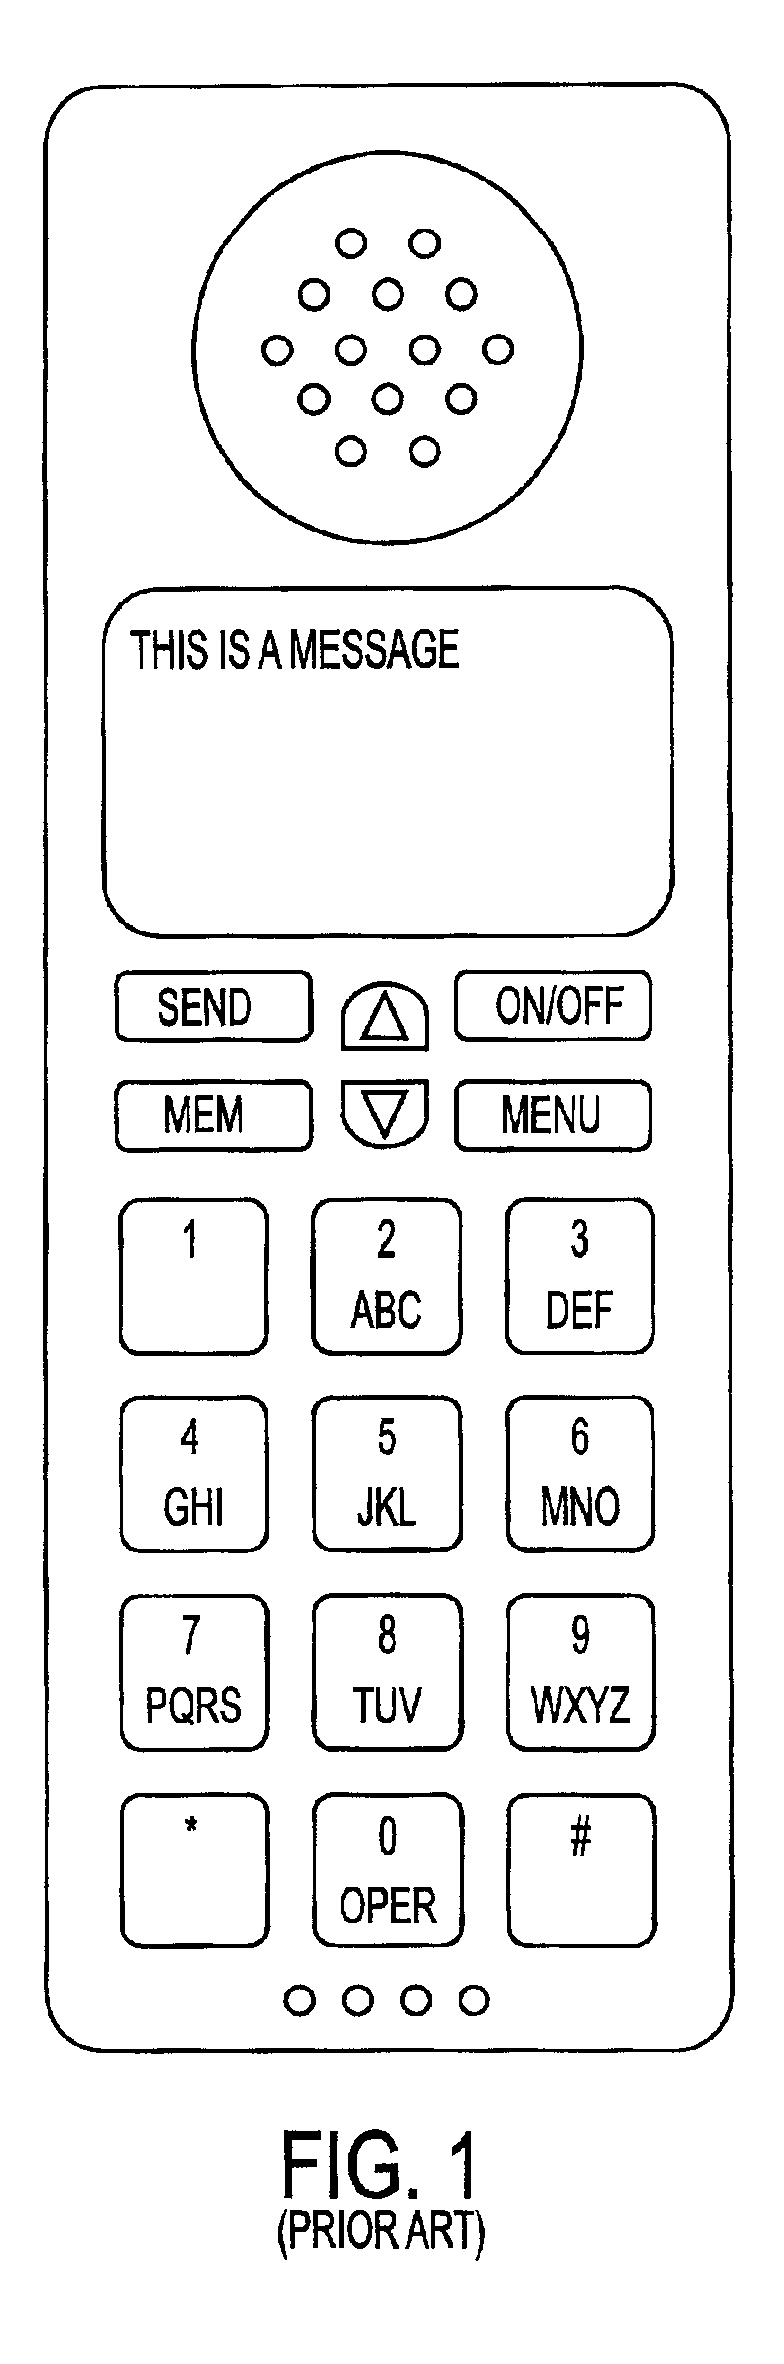 Method and apparatus for alphanumeric data entry using a keypad